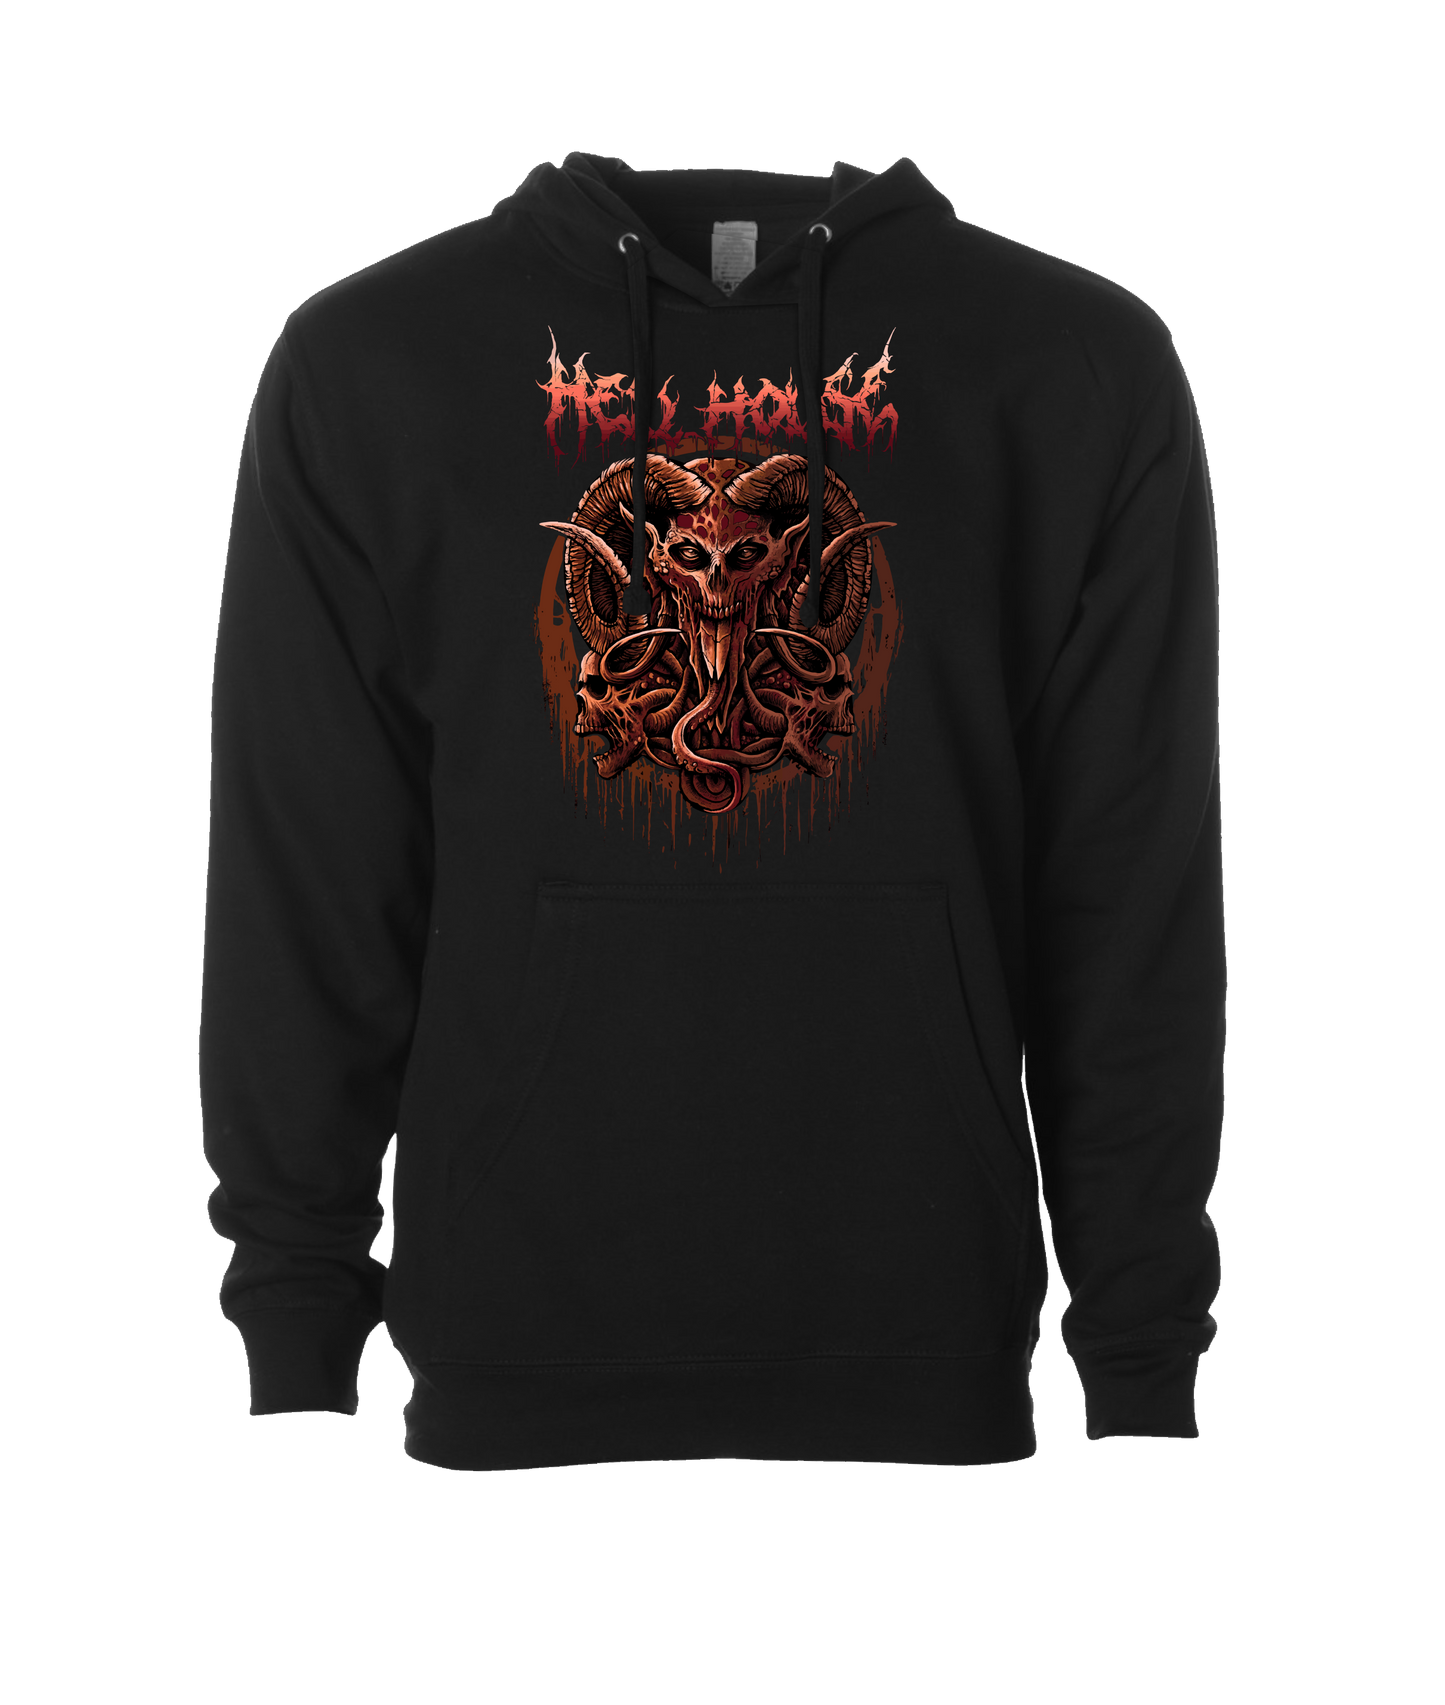 Hellhouse crypt - LORDSKVLL - Black Hoodie